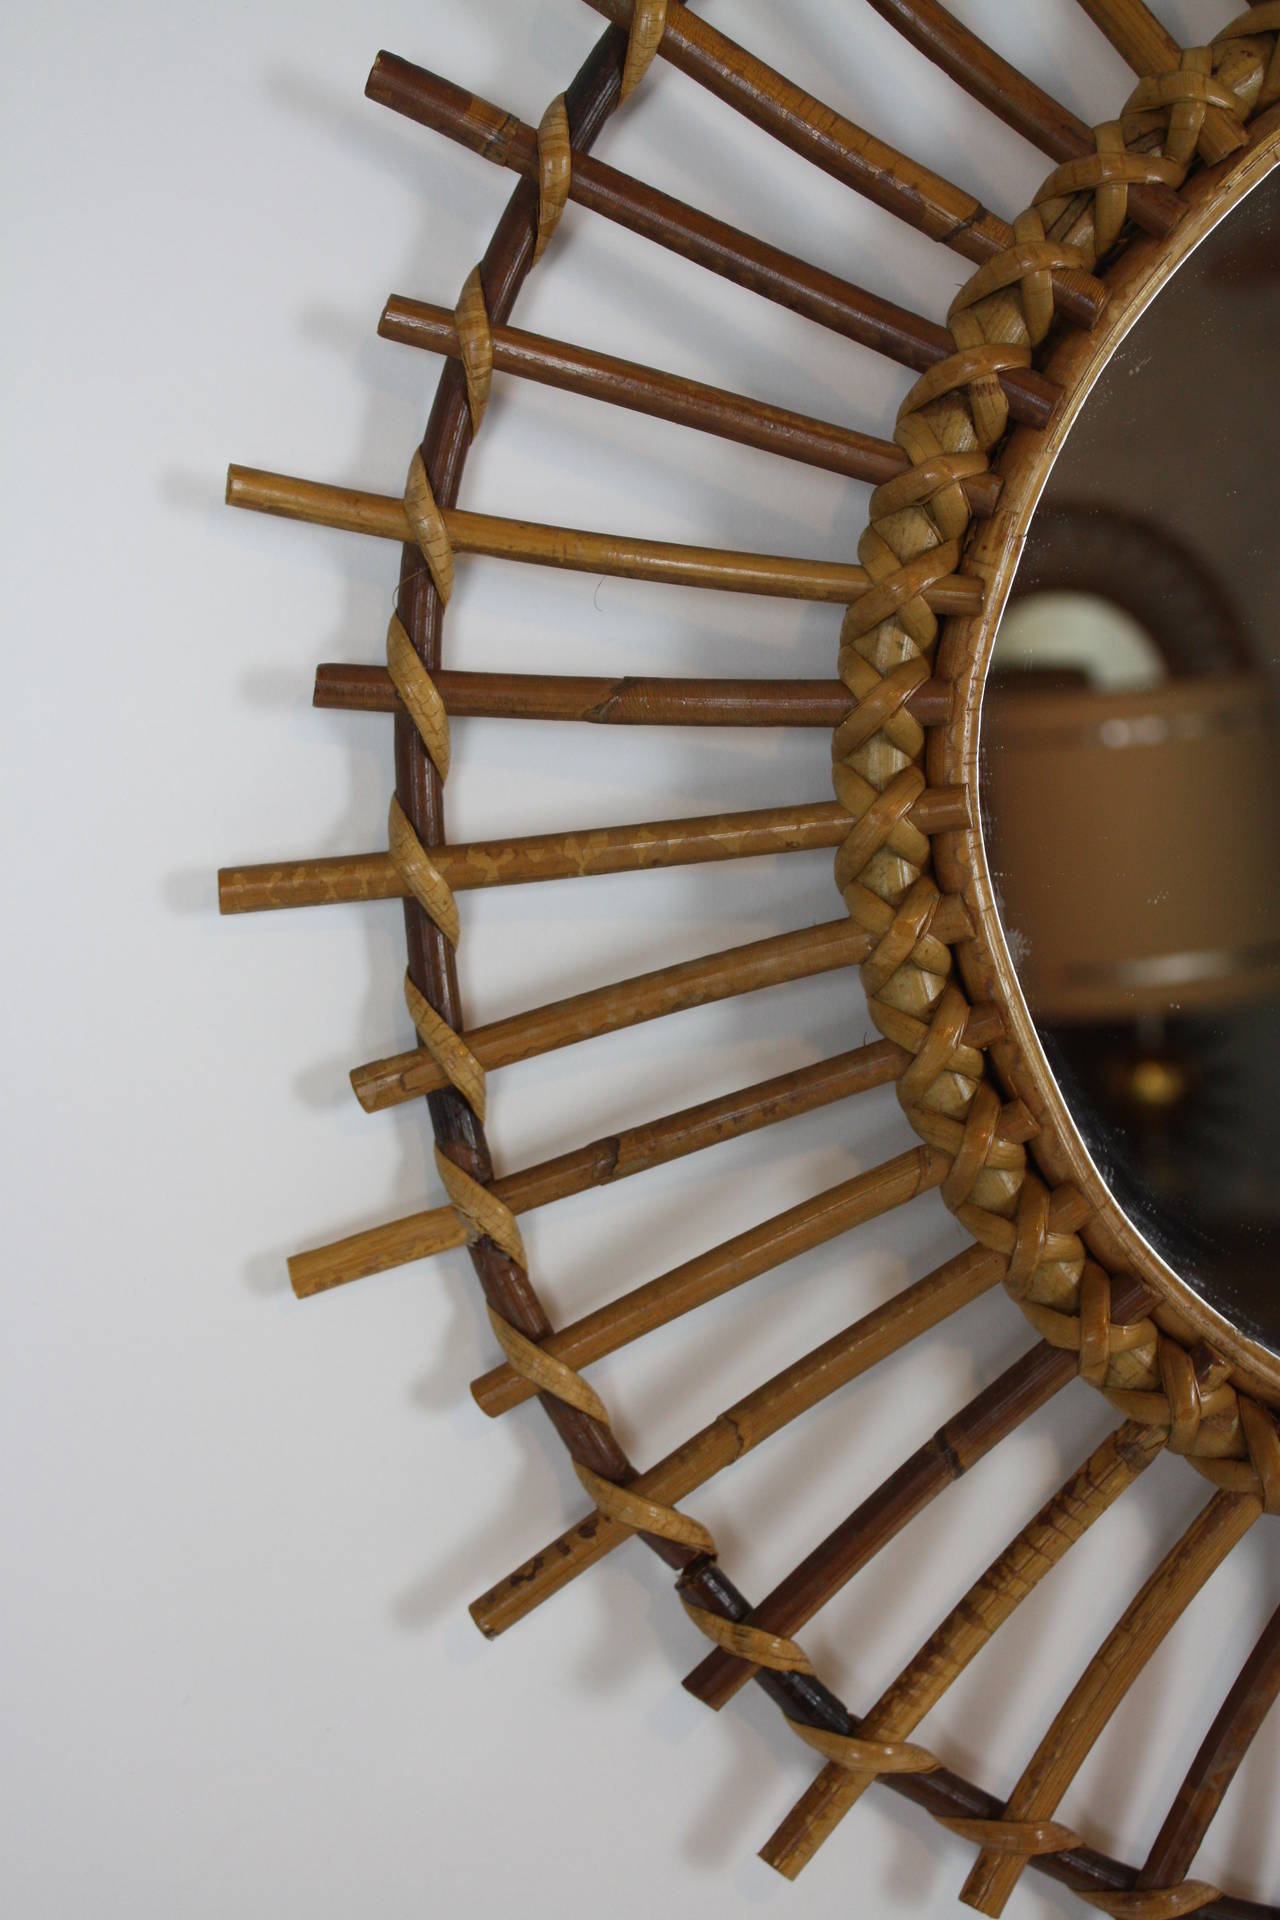 Spanish rattan handcrafted sunburst mirror.

Diameter of the glass mirror:  29 cm